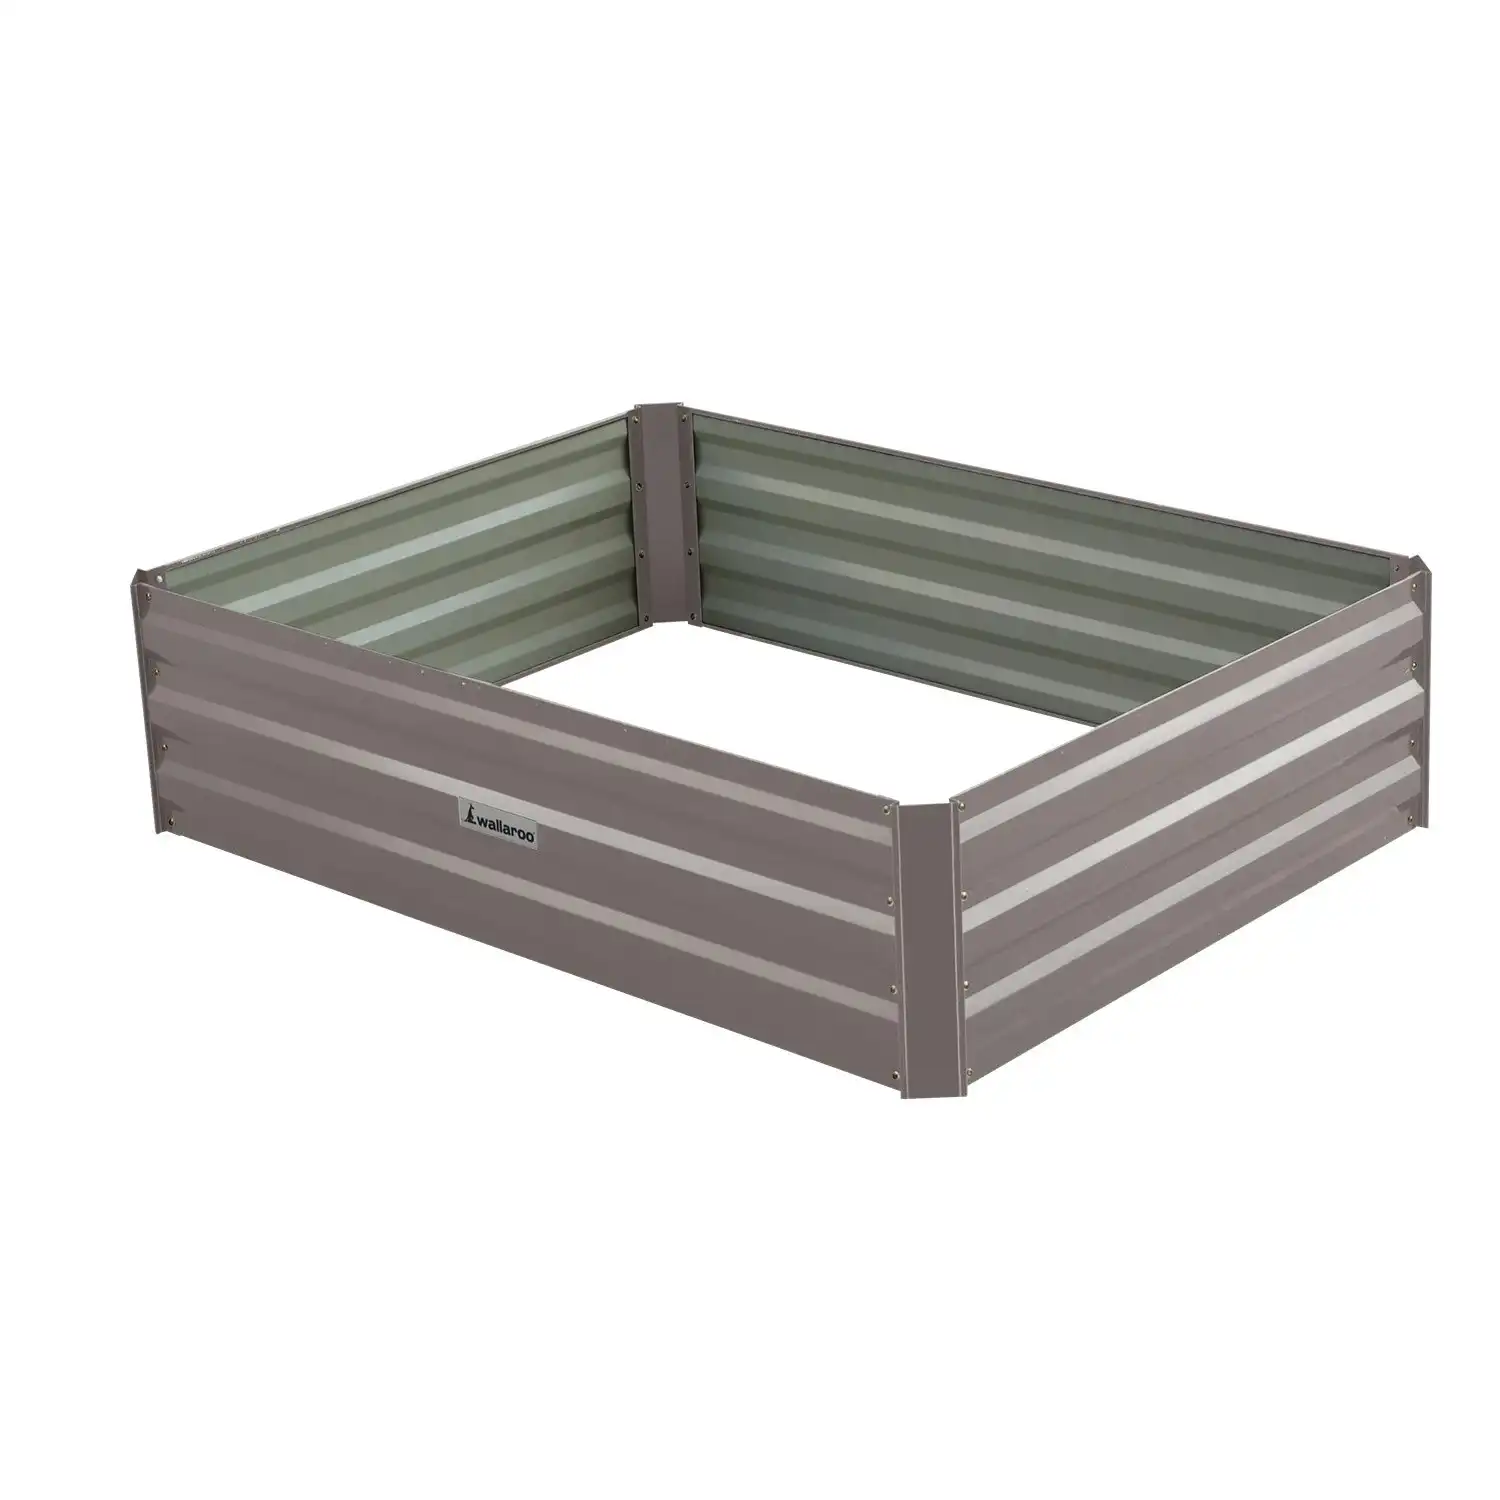 Wallaroo 120 x 90 x 30cm Galvanized Steel Garden Bed - Grey